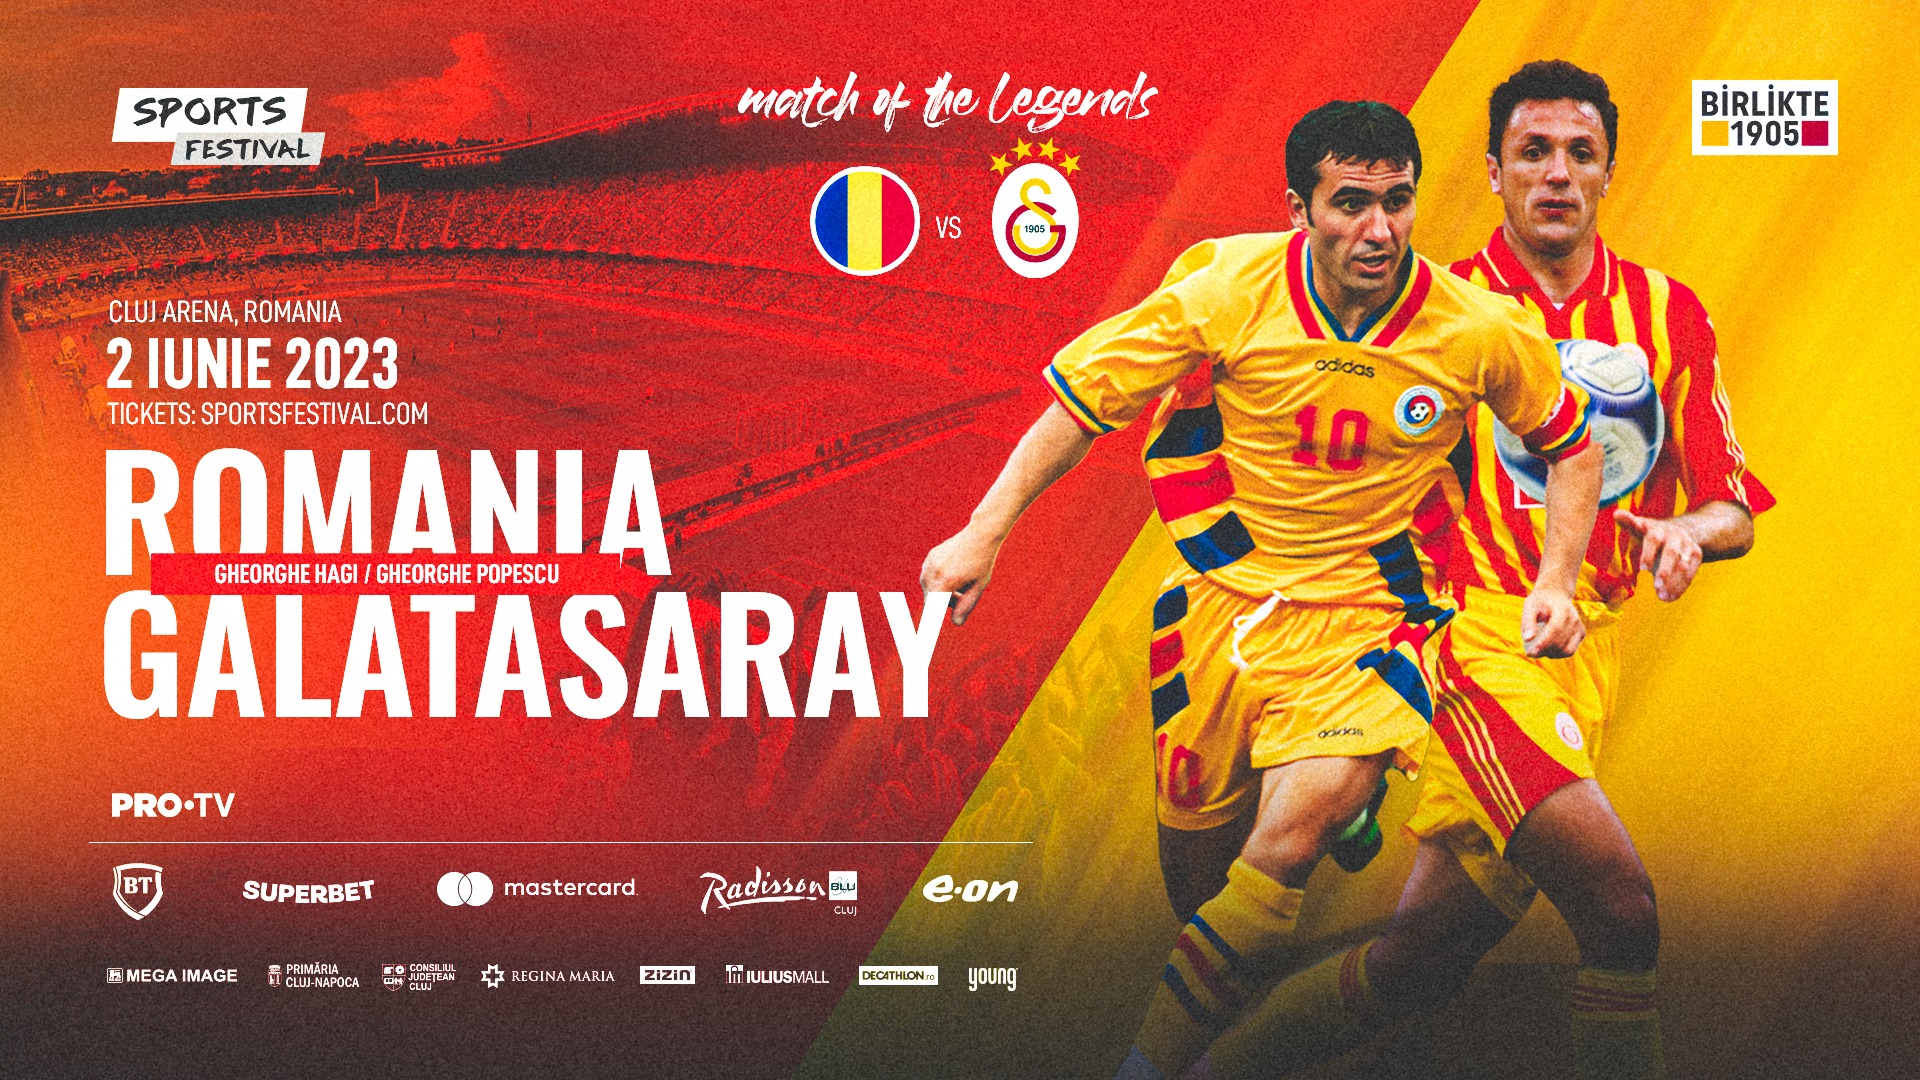 Romania vs Galatasaray | Match of The Legends @ Sports Festival 2023